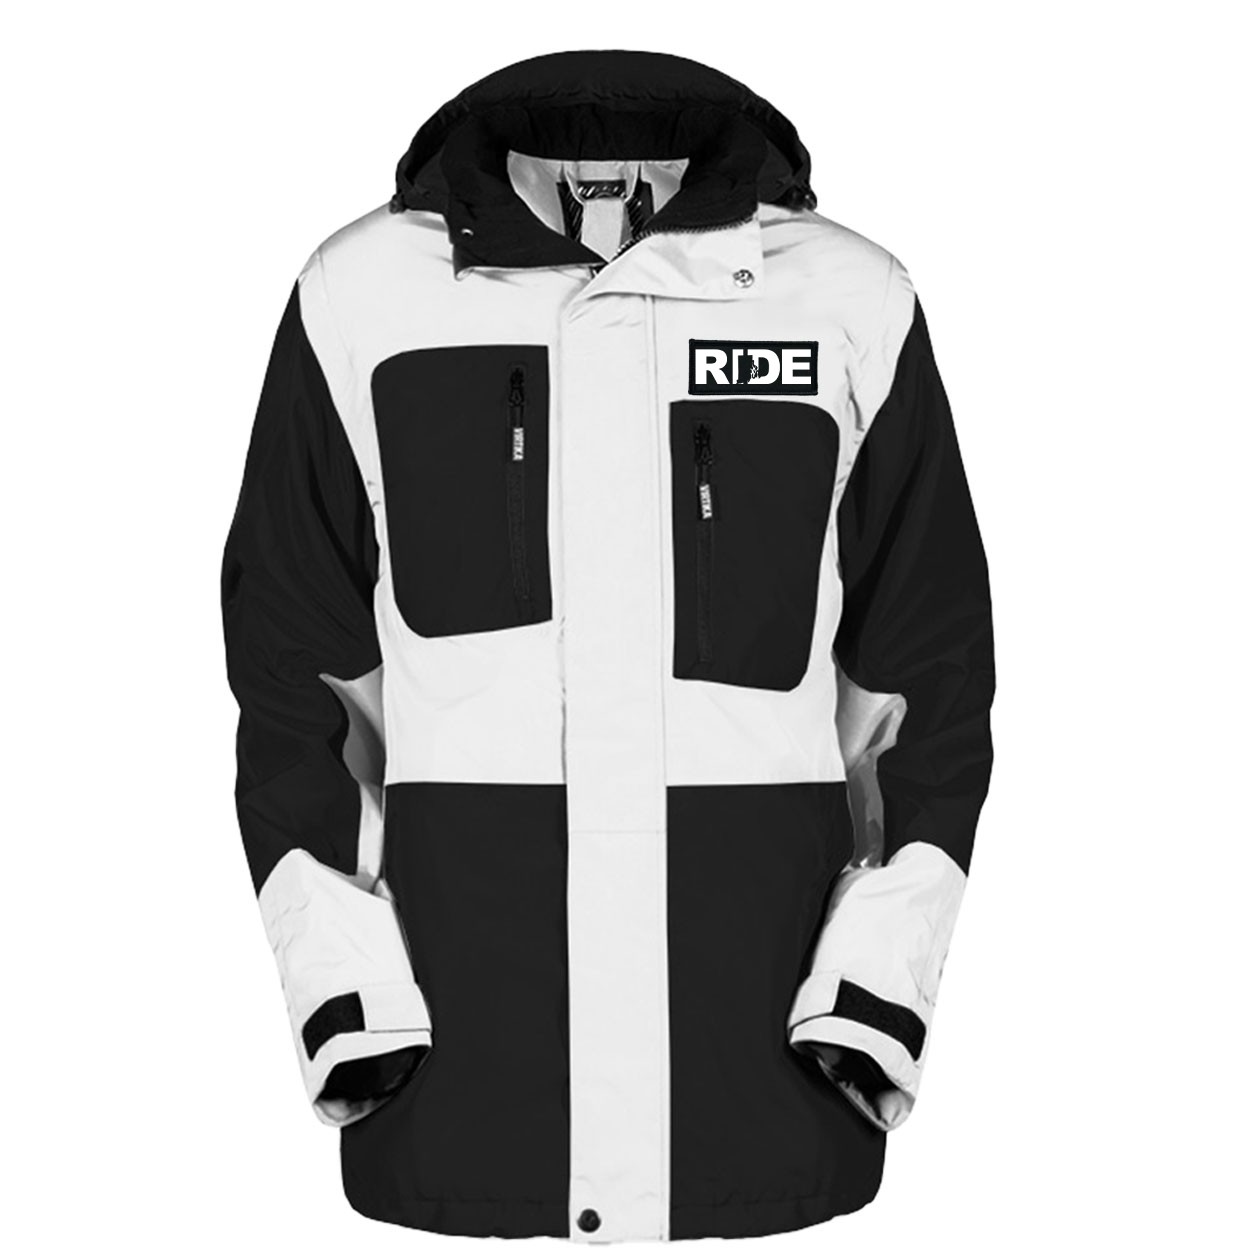 Ride Rhode Island Pro Waterproof Breathable Winter Virtika Jacket Black/White (White Logo)